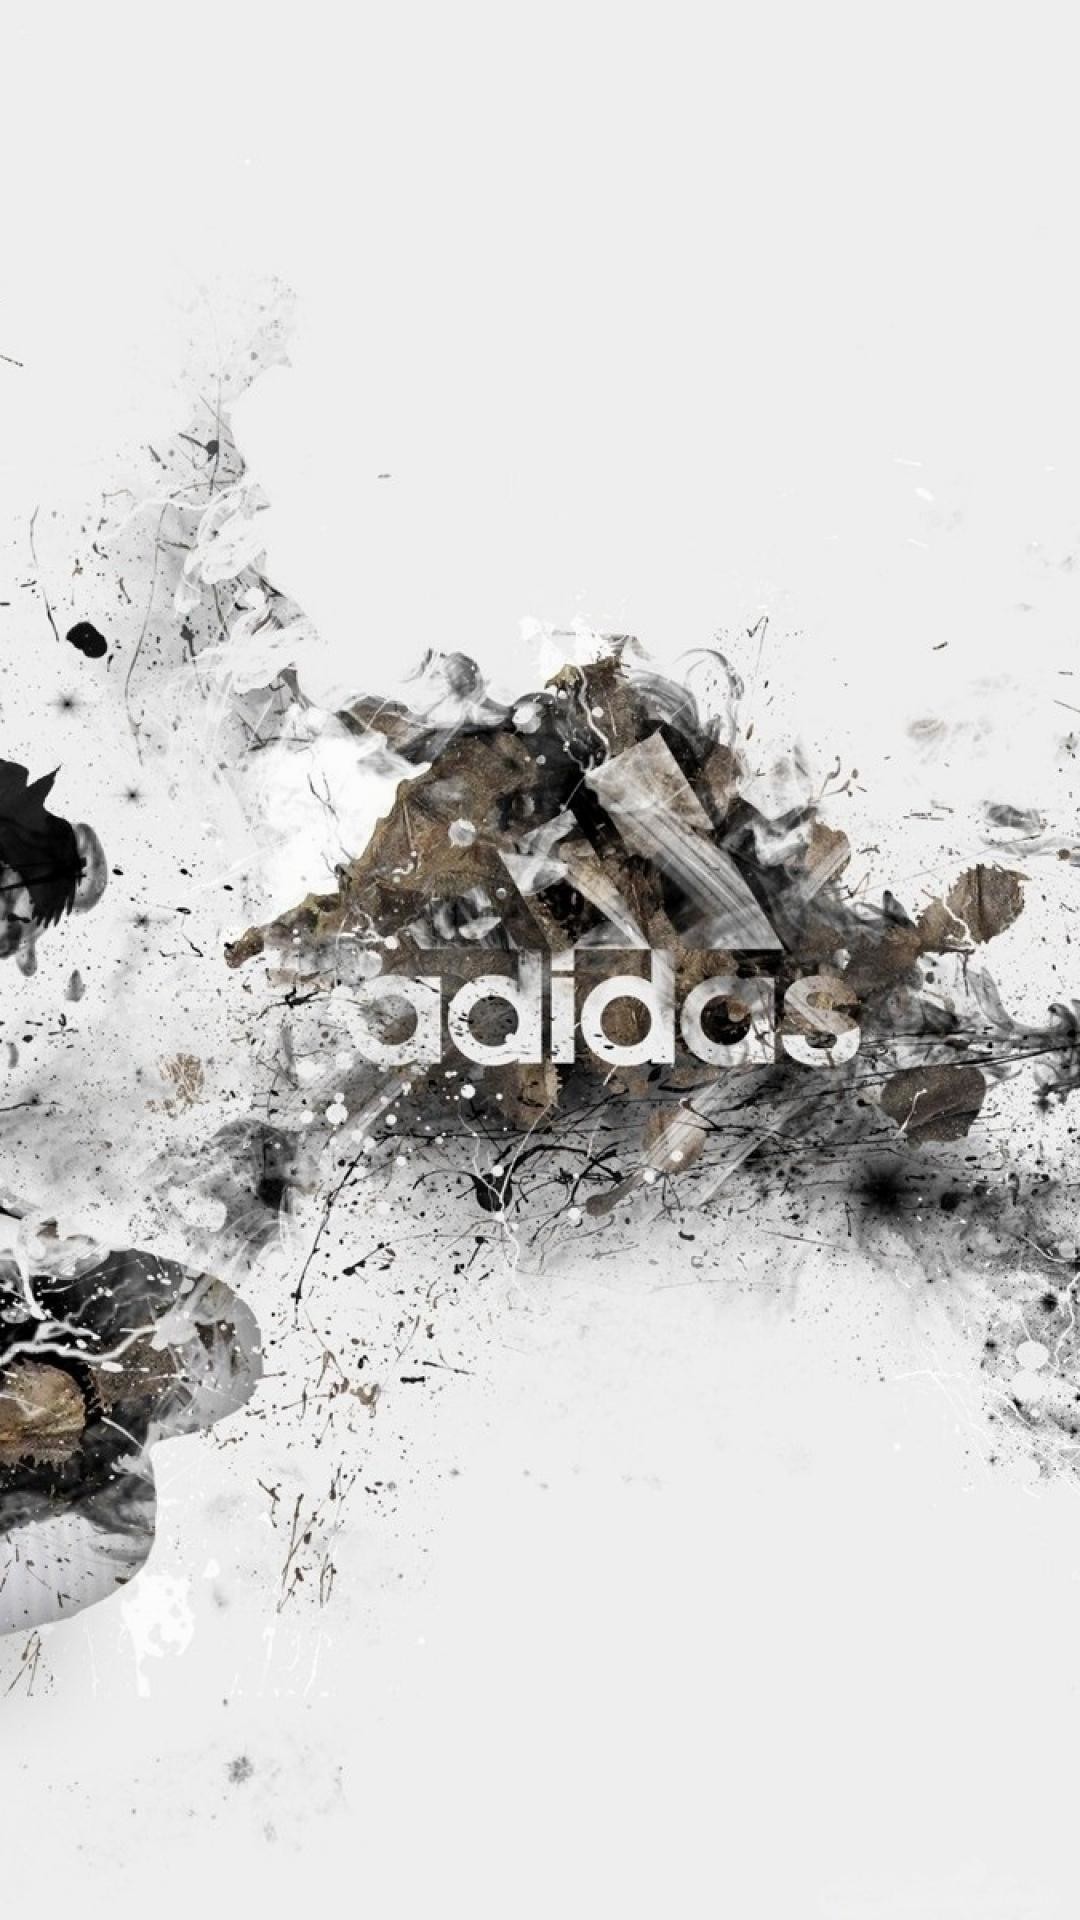 1080x1920 wallpaper.wiki-Adidas-Iphone-Sneakers-Stylish-Brand-Wallpaper-